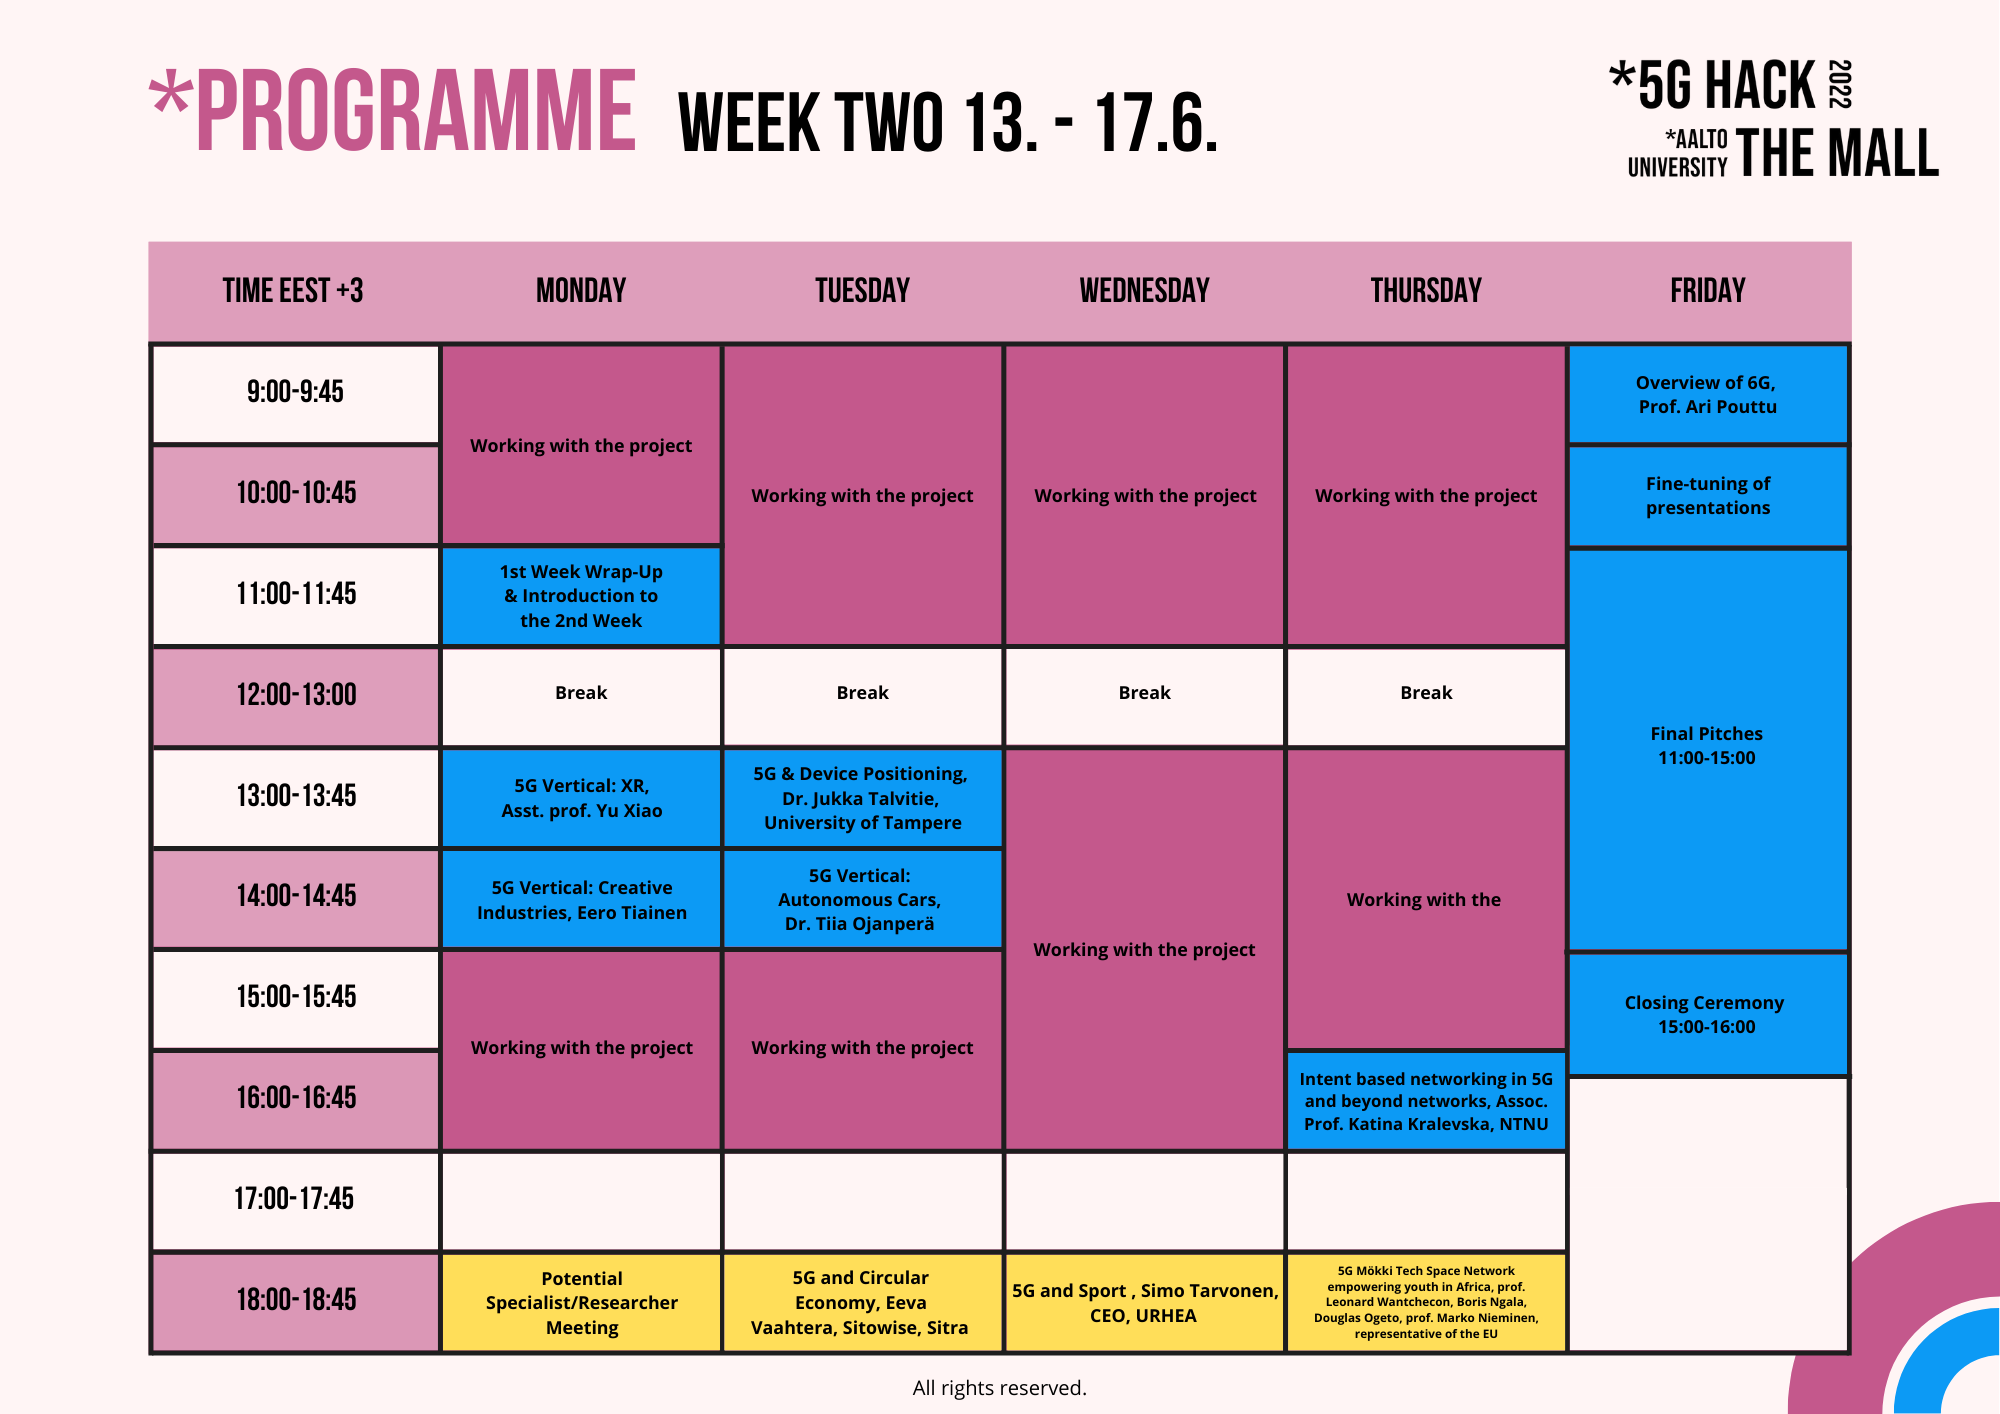 Programme week two